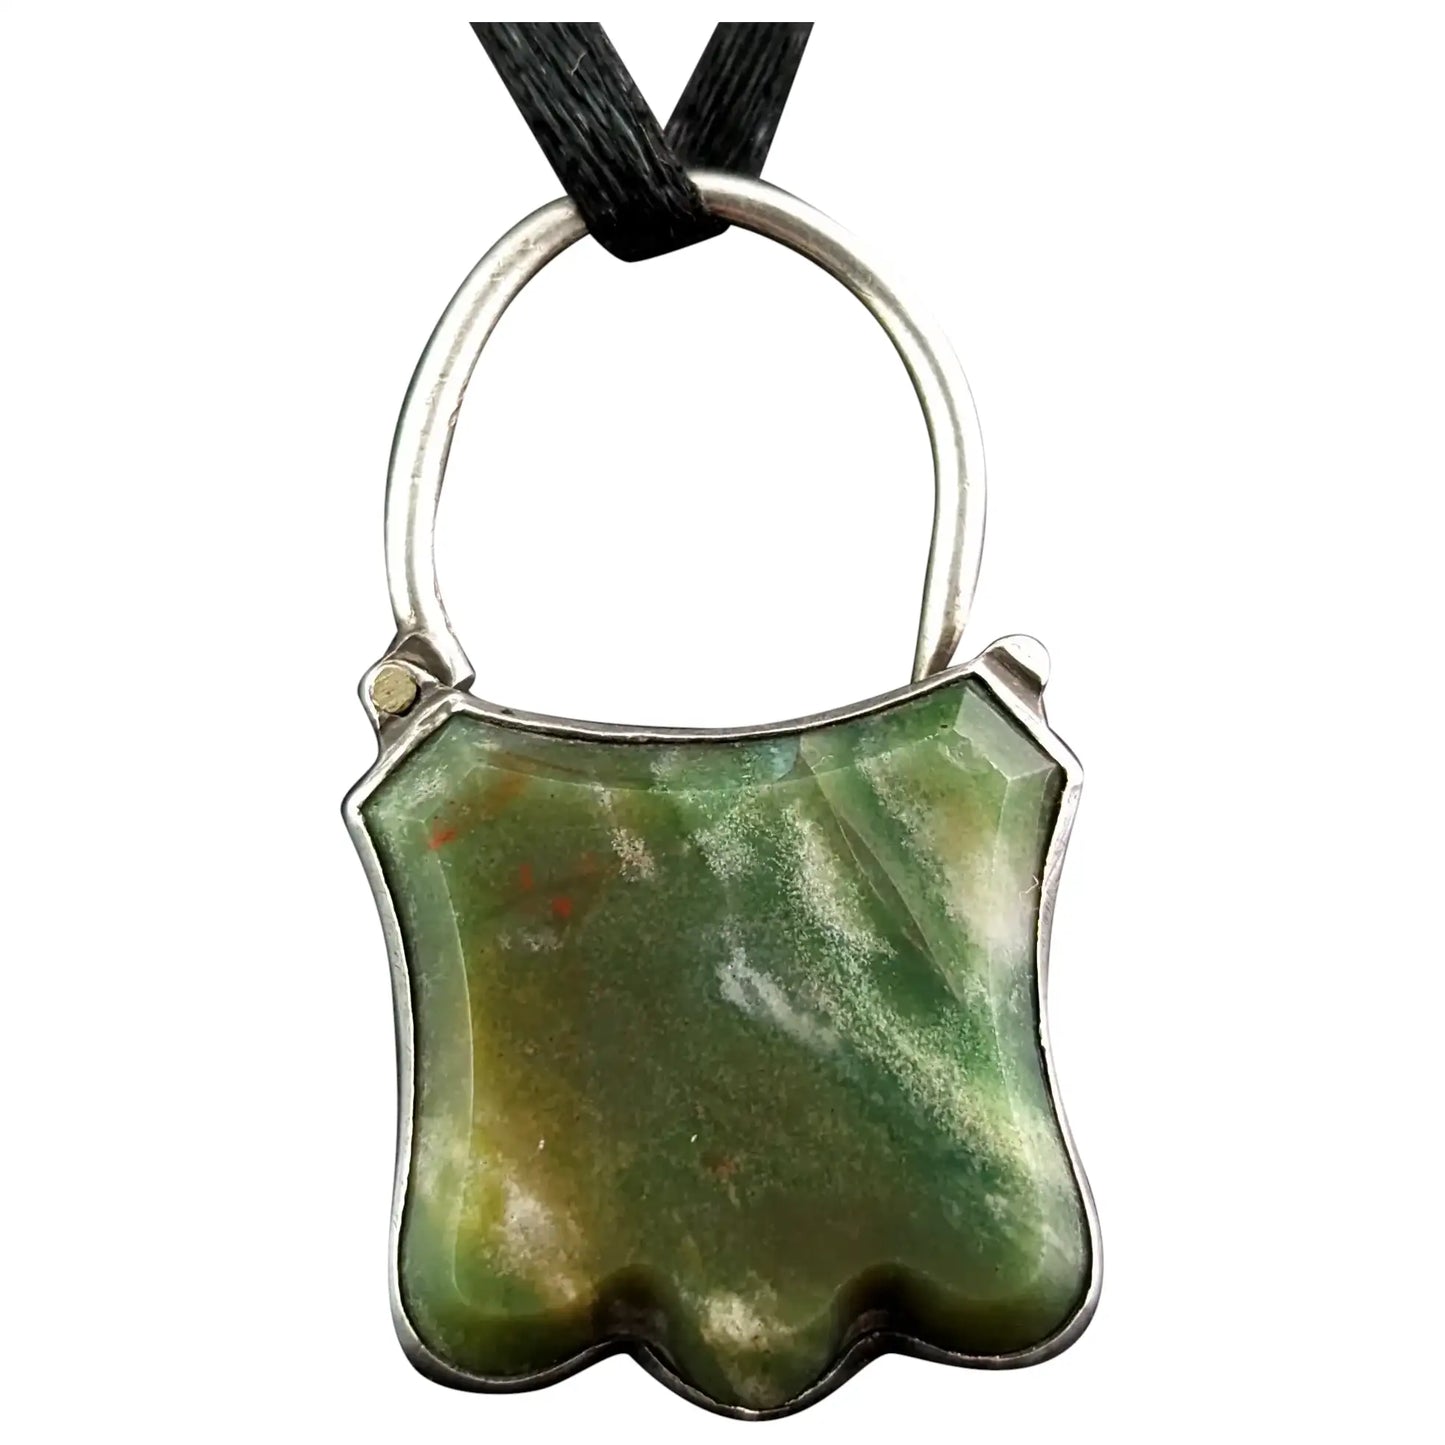 Antique silver padlock pendant, Green Jasper, Shield shaped, Victorian